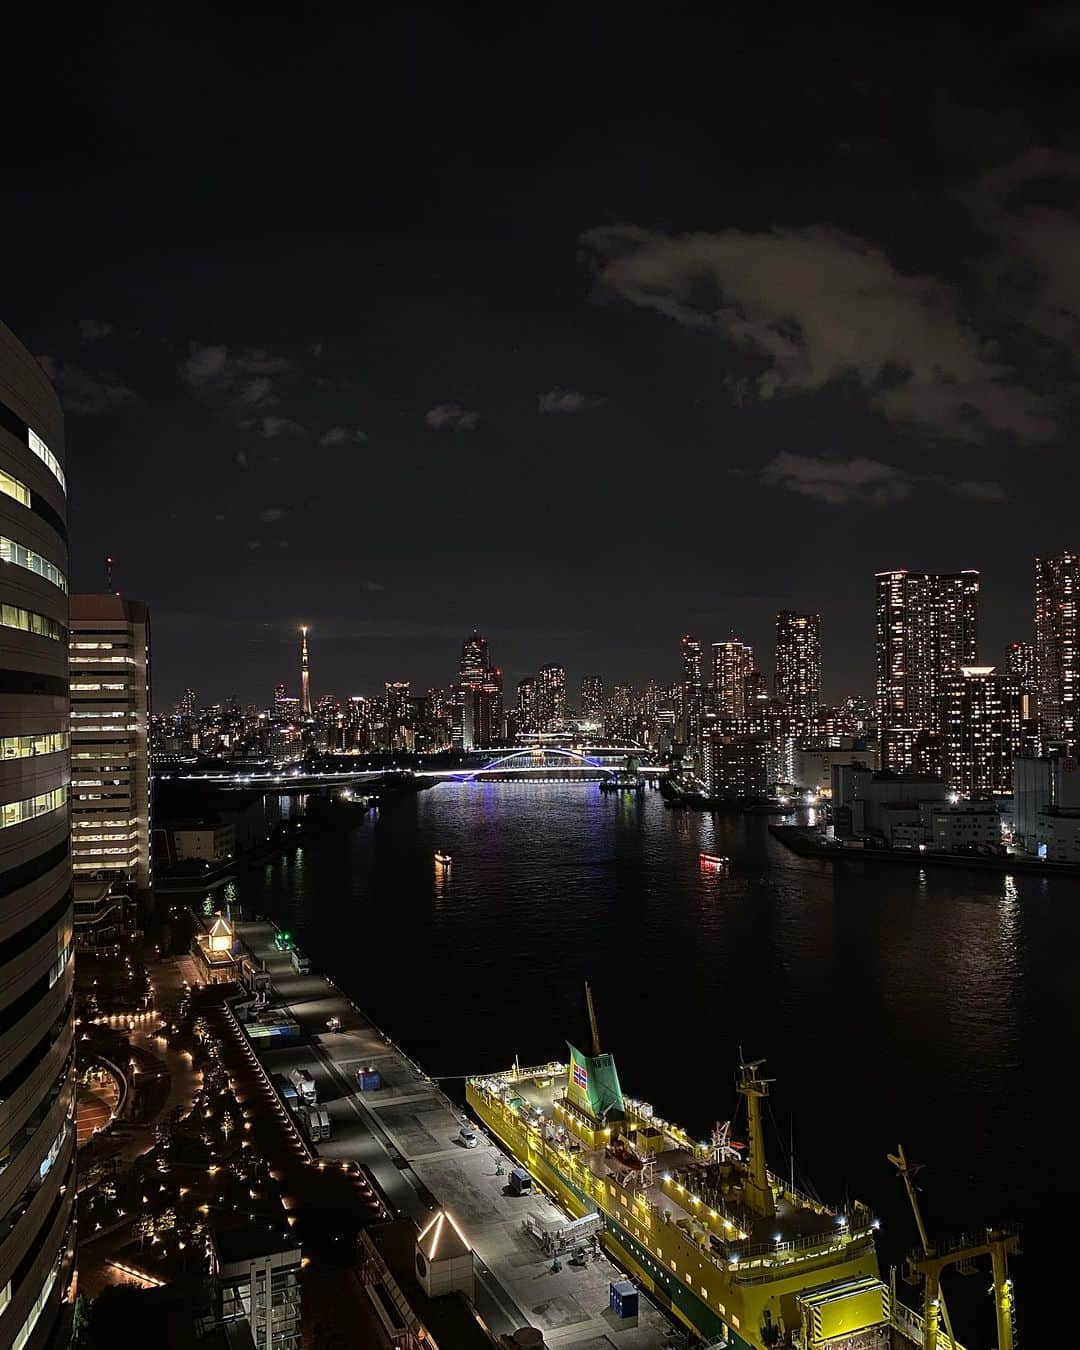 InterContinental Tokyo Bayのインスタグラム：「. エグゼクティブフロア18階からのリバービューの夜景は、『リトルマンハッタン』と称され、東京ならではのビル群と隅田川にかかる橋のイルミネーションを臨むことができます🌃  秋が深まり初冬に向けて空気が澄み、より一層美しい夜景に出会えることができます✨  行き交う屋形船、波止場の作業車、出港を待つ客船を眺めていると、時が過ぎるのを忘れてしまいます。  #intercontinentaltokyobay  #ホテルインターコンチネンタル東京ベイ  #インターコンチネンタル東京ベイ  #リバービュー #隅田川  #riverview #sumidariver  #客船 #屋形船 #橘丸  #夜景 #夜景スポット #夜景撮影  #夜景が綺麗 #夜景好きな人と繋がりたい  #夜景が好き #nightview #nightview🌃  #東京夜景 #tokyonightview」